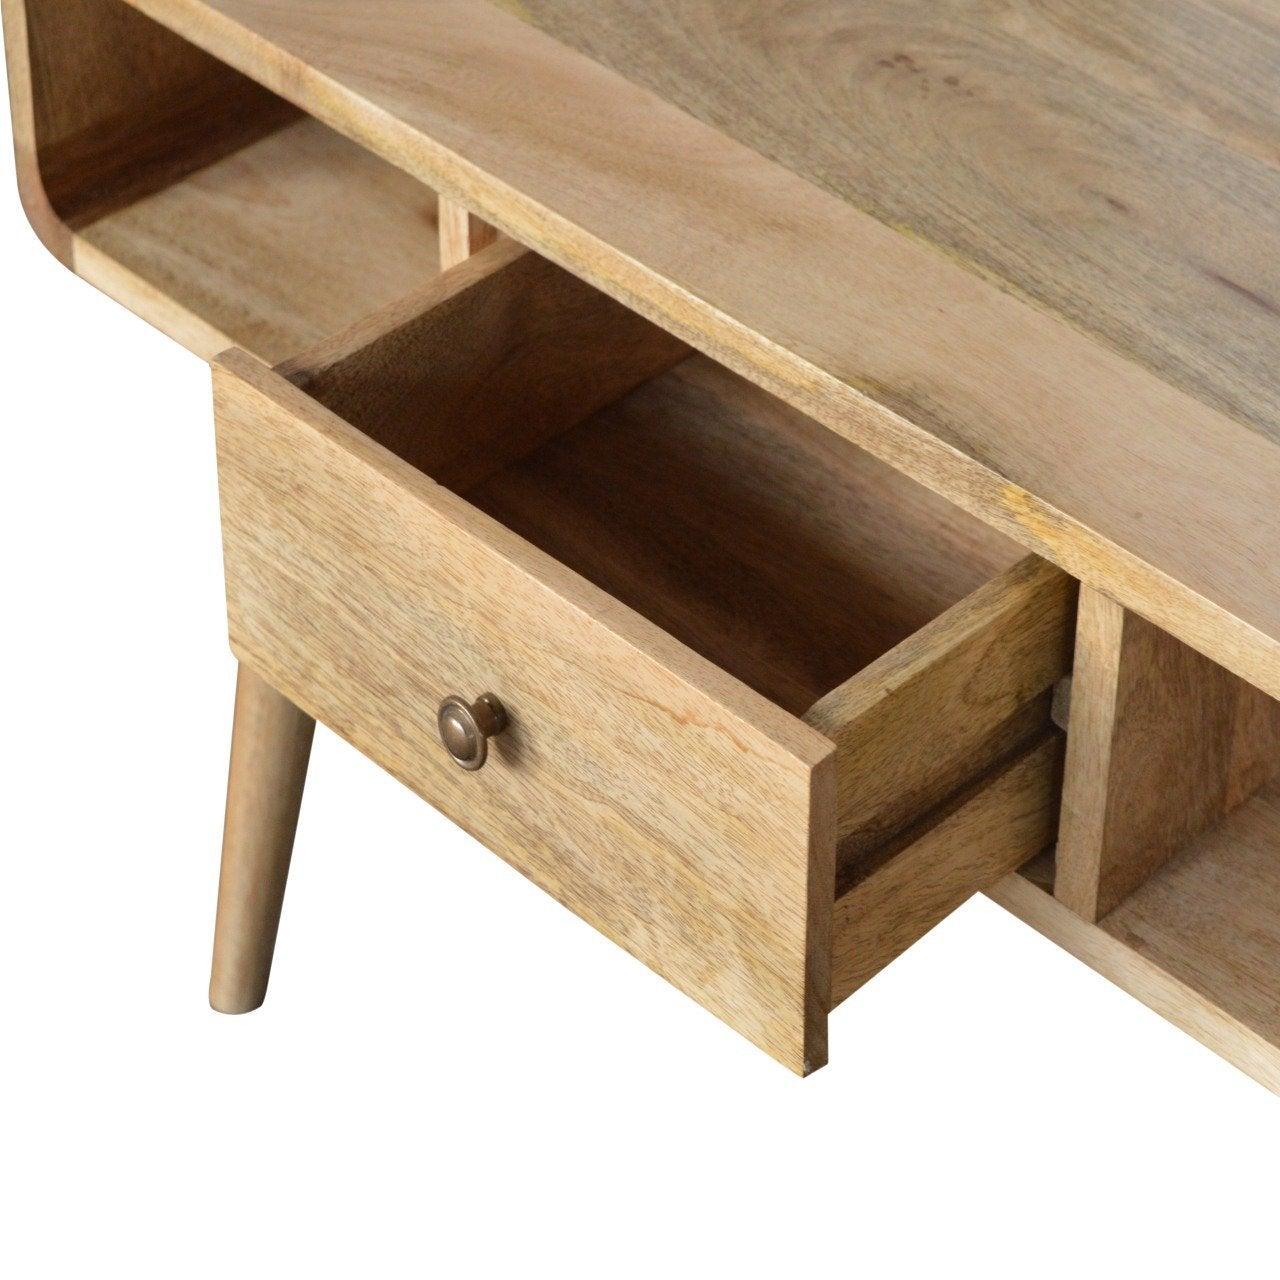 Curved oak-ish coffee table - crimblefest furniture - image 6